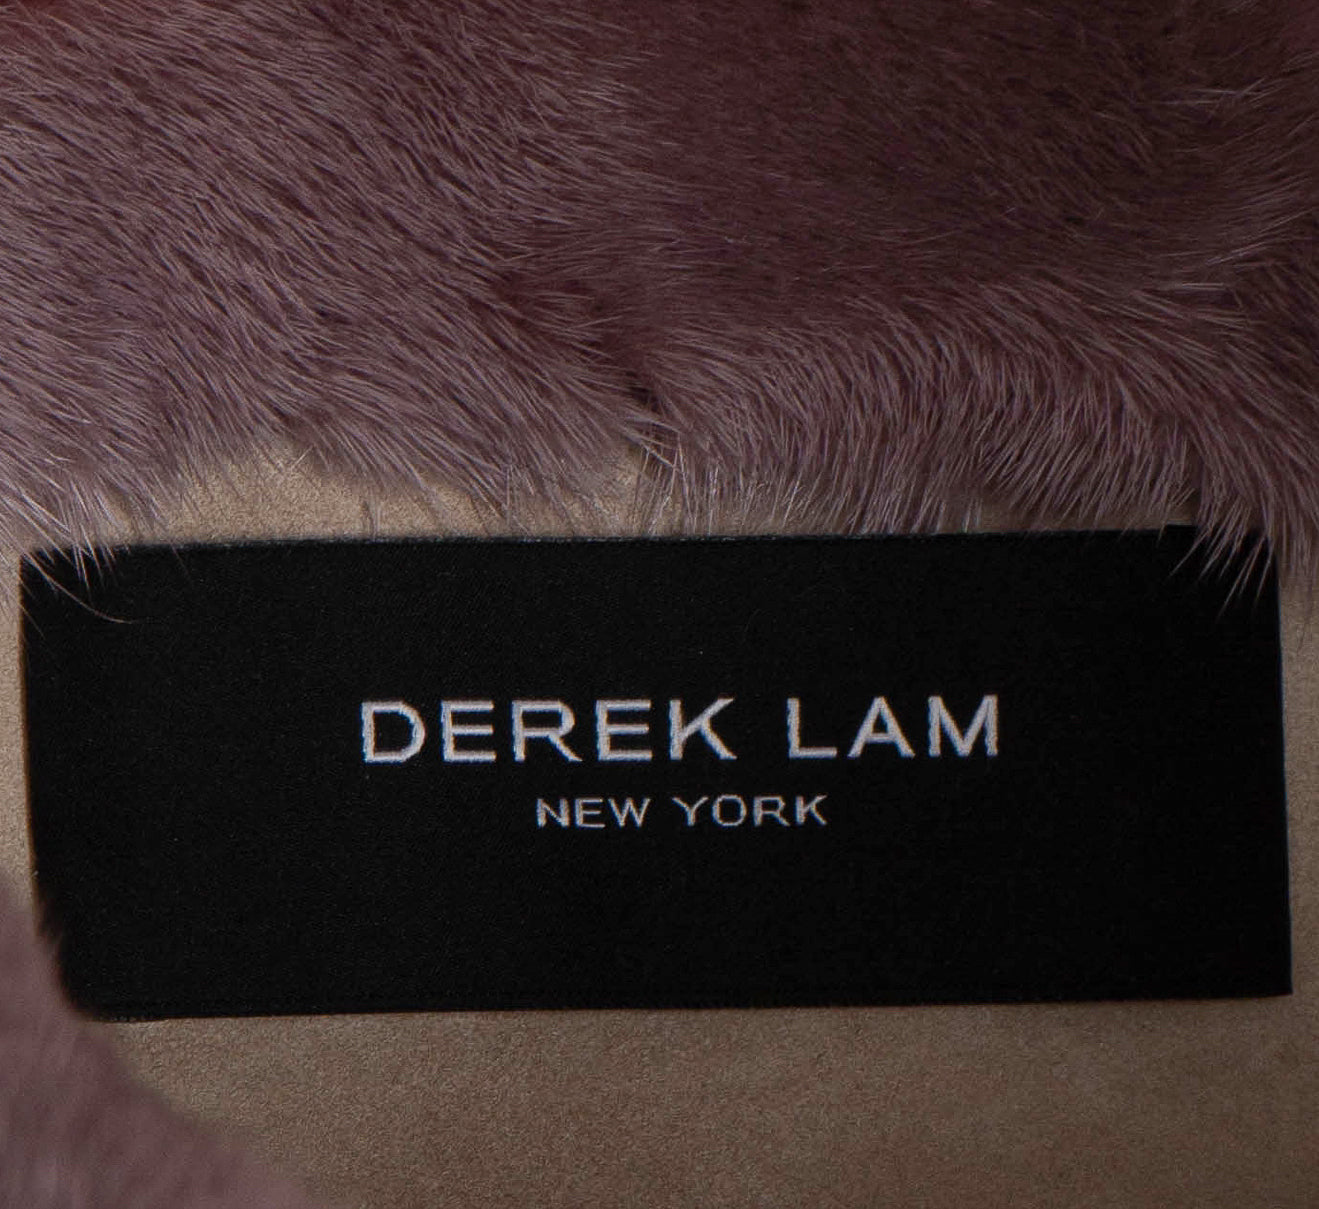 DEREK LAM (RARE) Bag Size: 13.75" x 4.25" x 8"